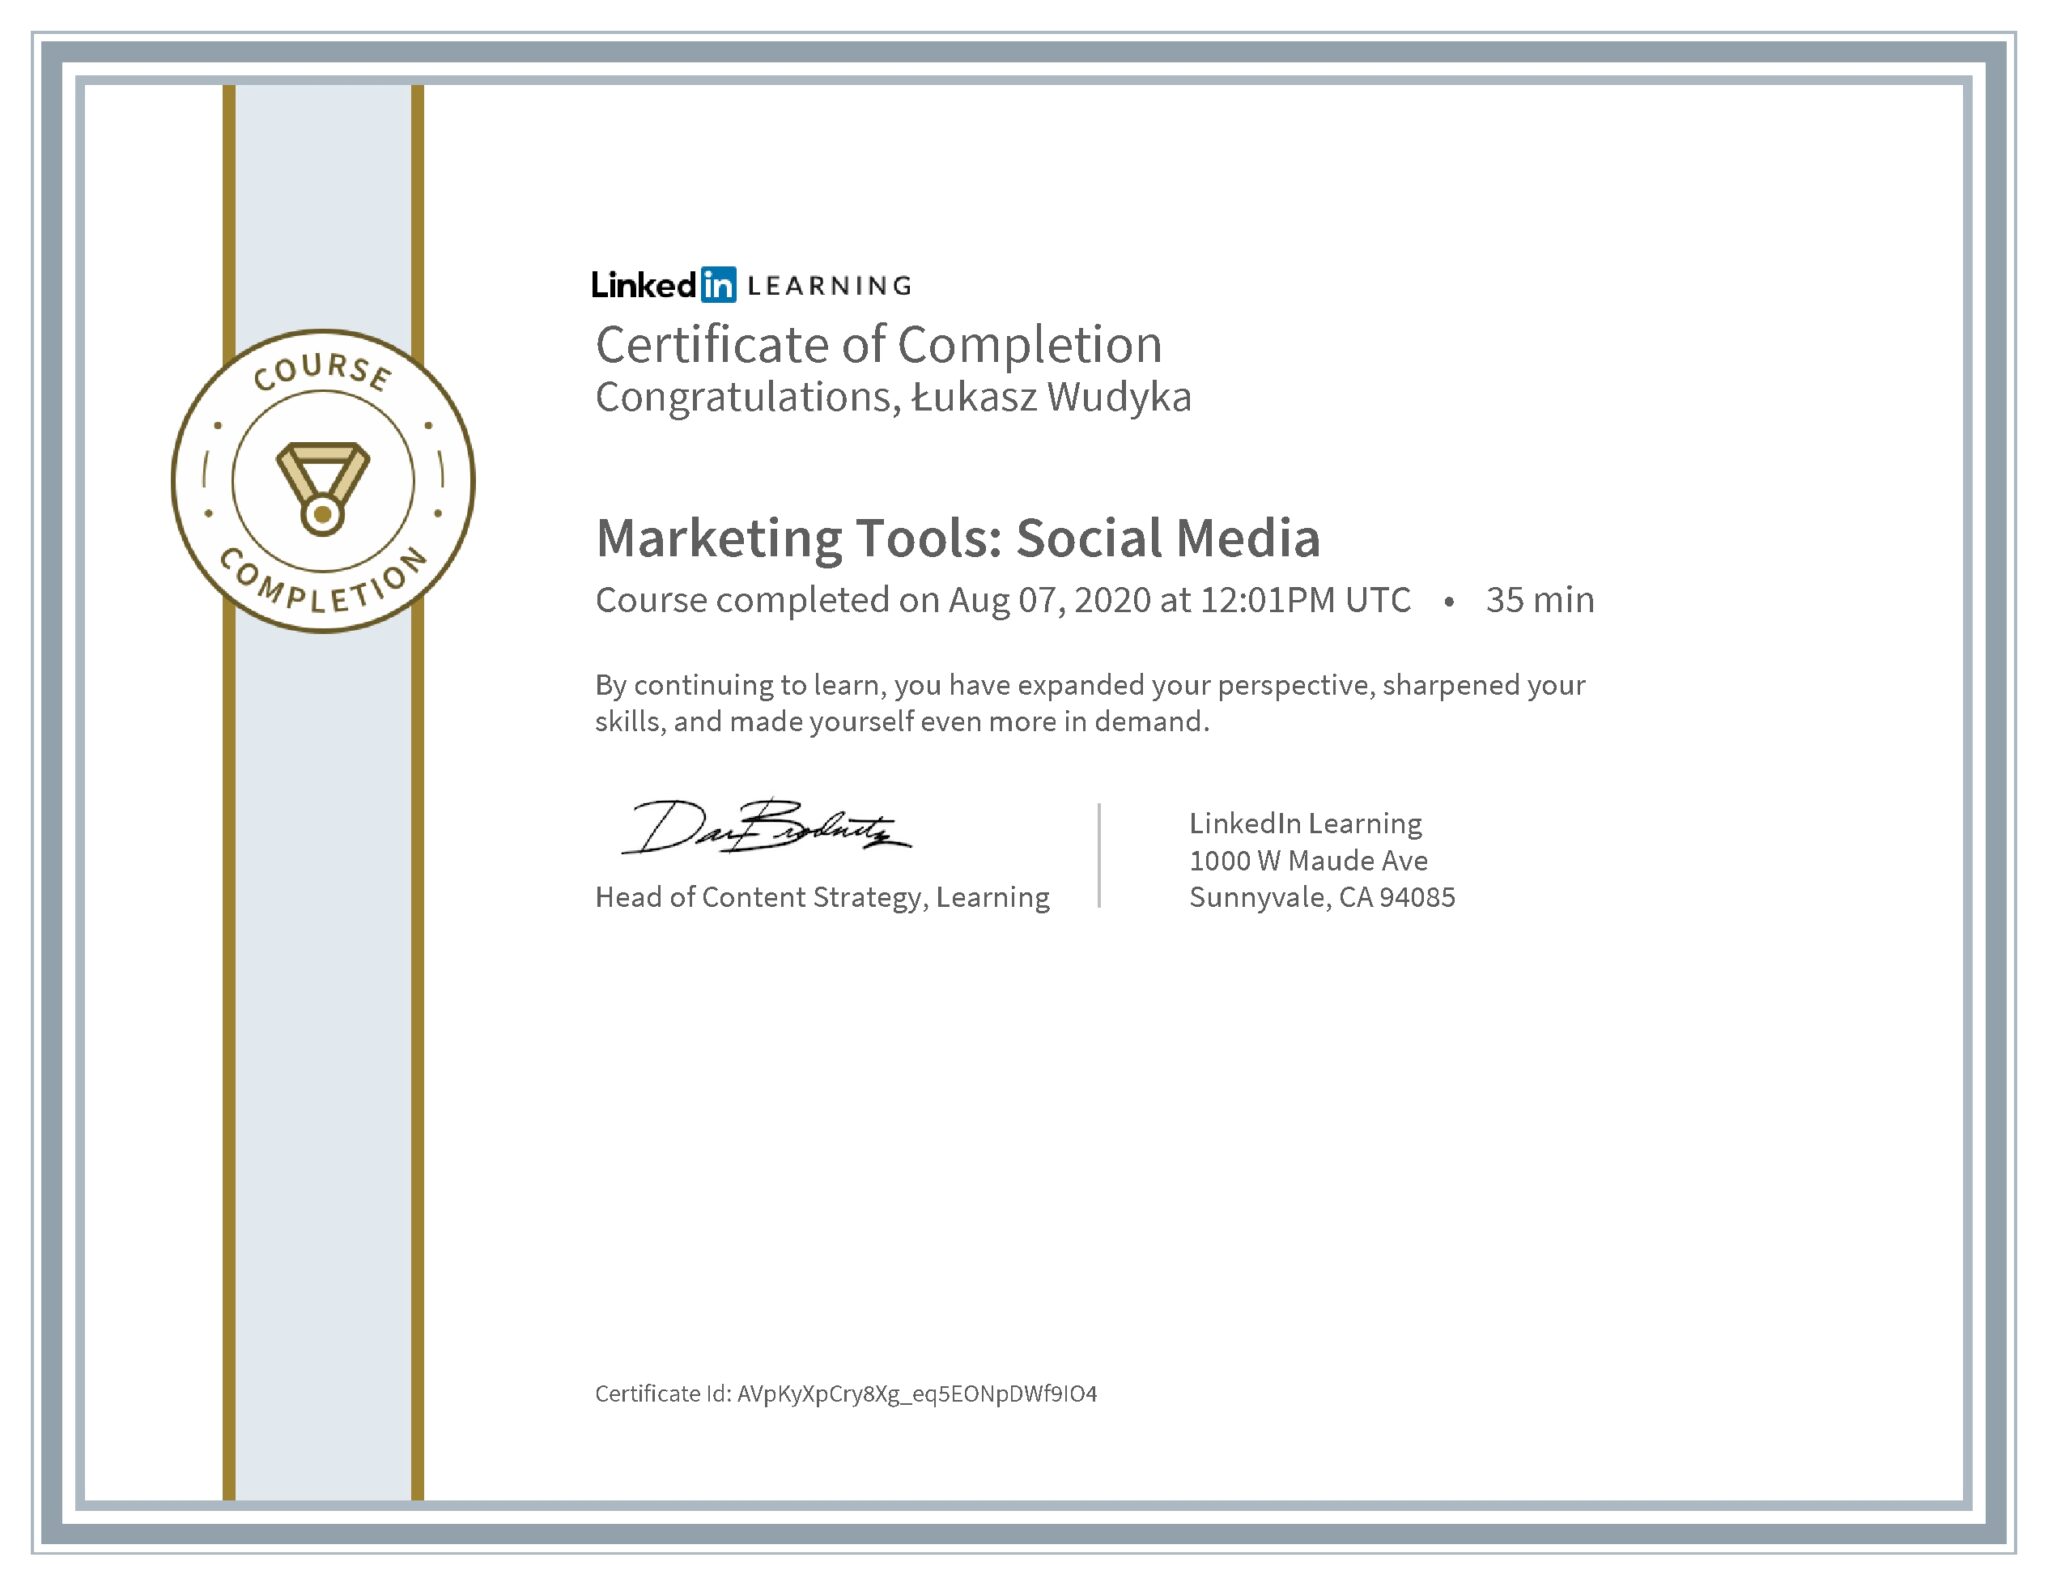 Łukasz Wudyka certyfikat LinkedIn Marketing Tools: Social Media